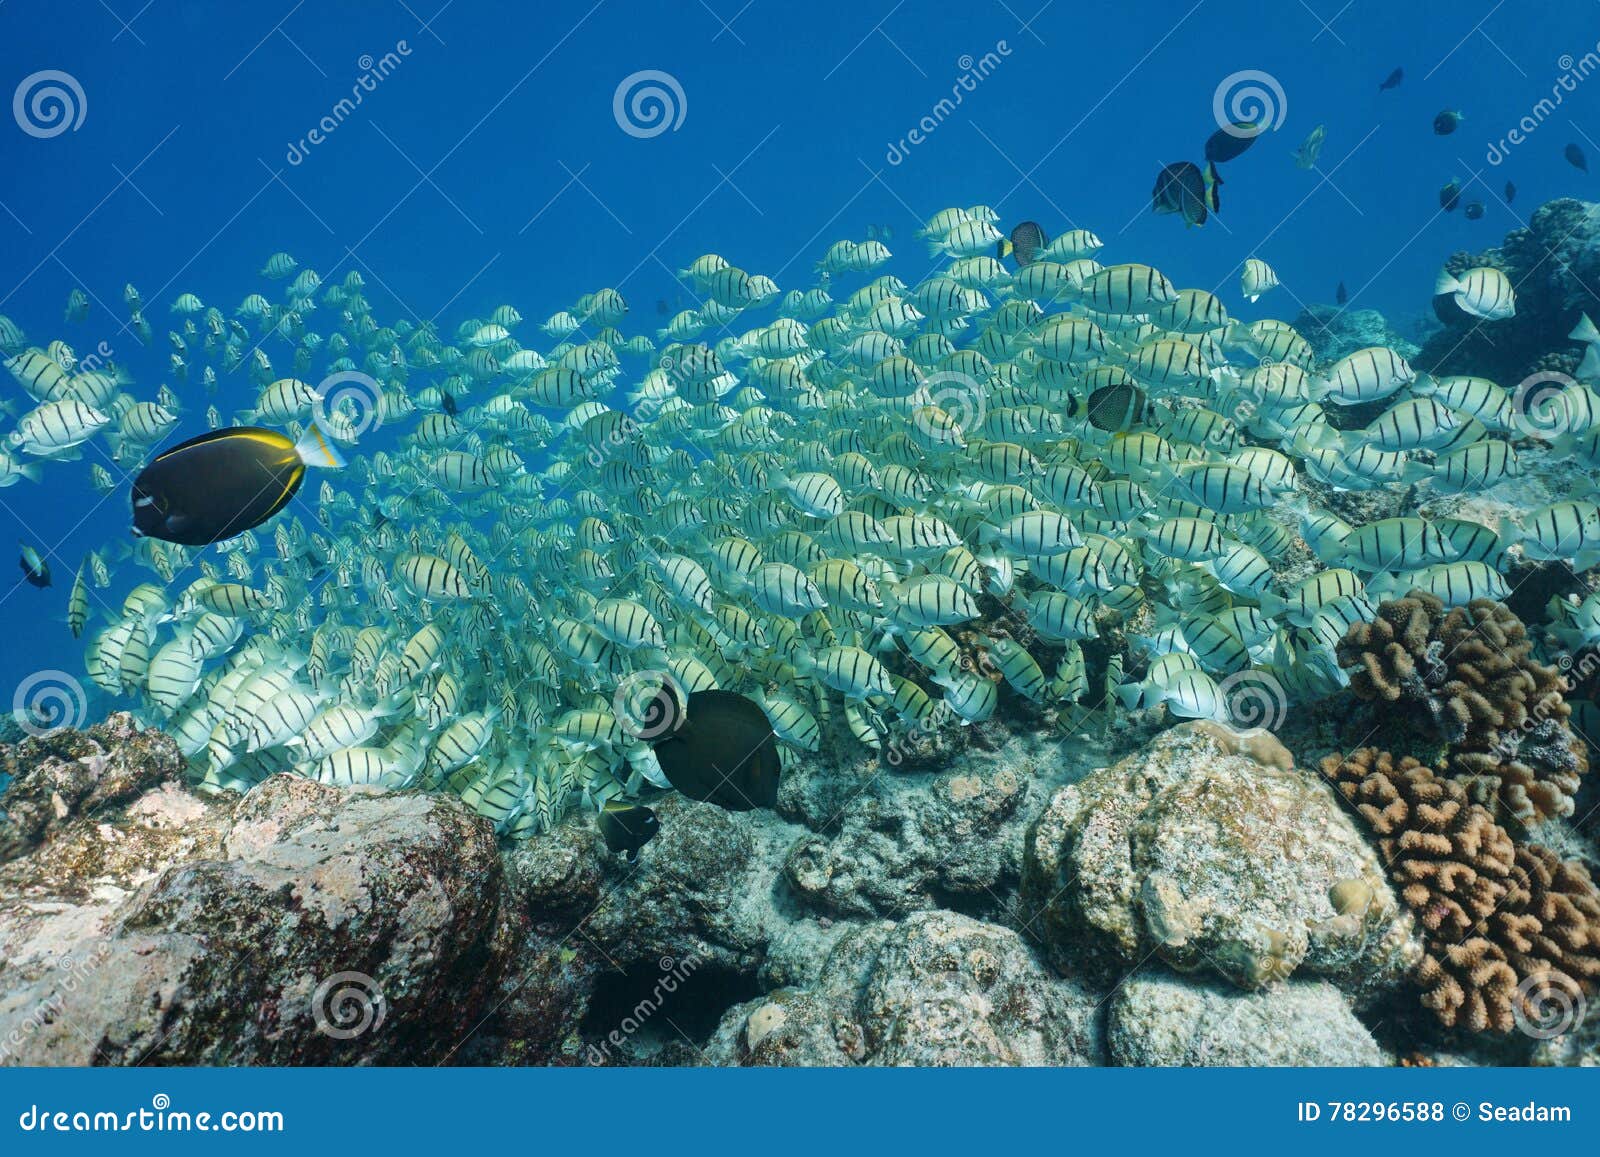 School of Tropical Fish Surgeonfish Pacific Ocean Stock Photo